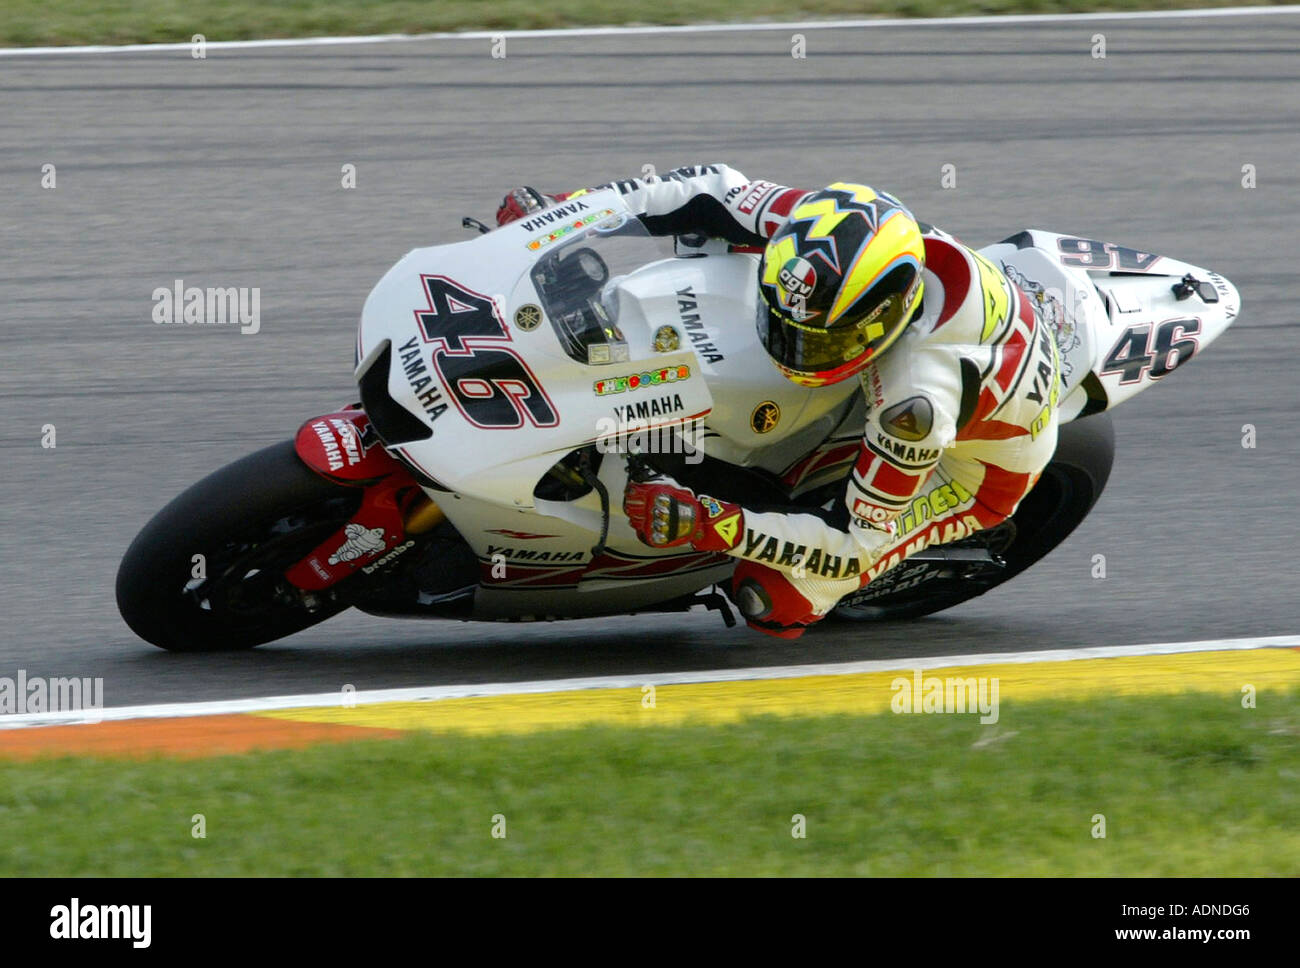 Valentino Rossi, World Moto GP champion  riding for Yamaha in the 2006 Moto GP championship in Valencia Stock Photo